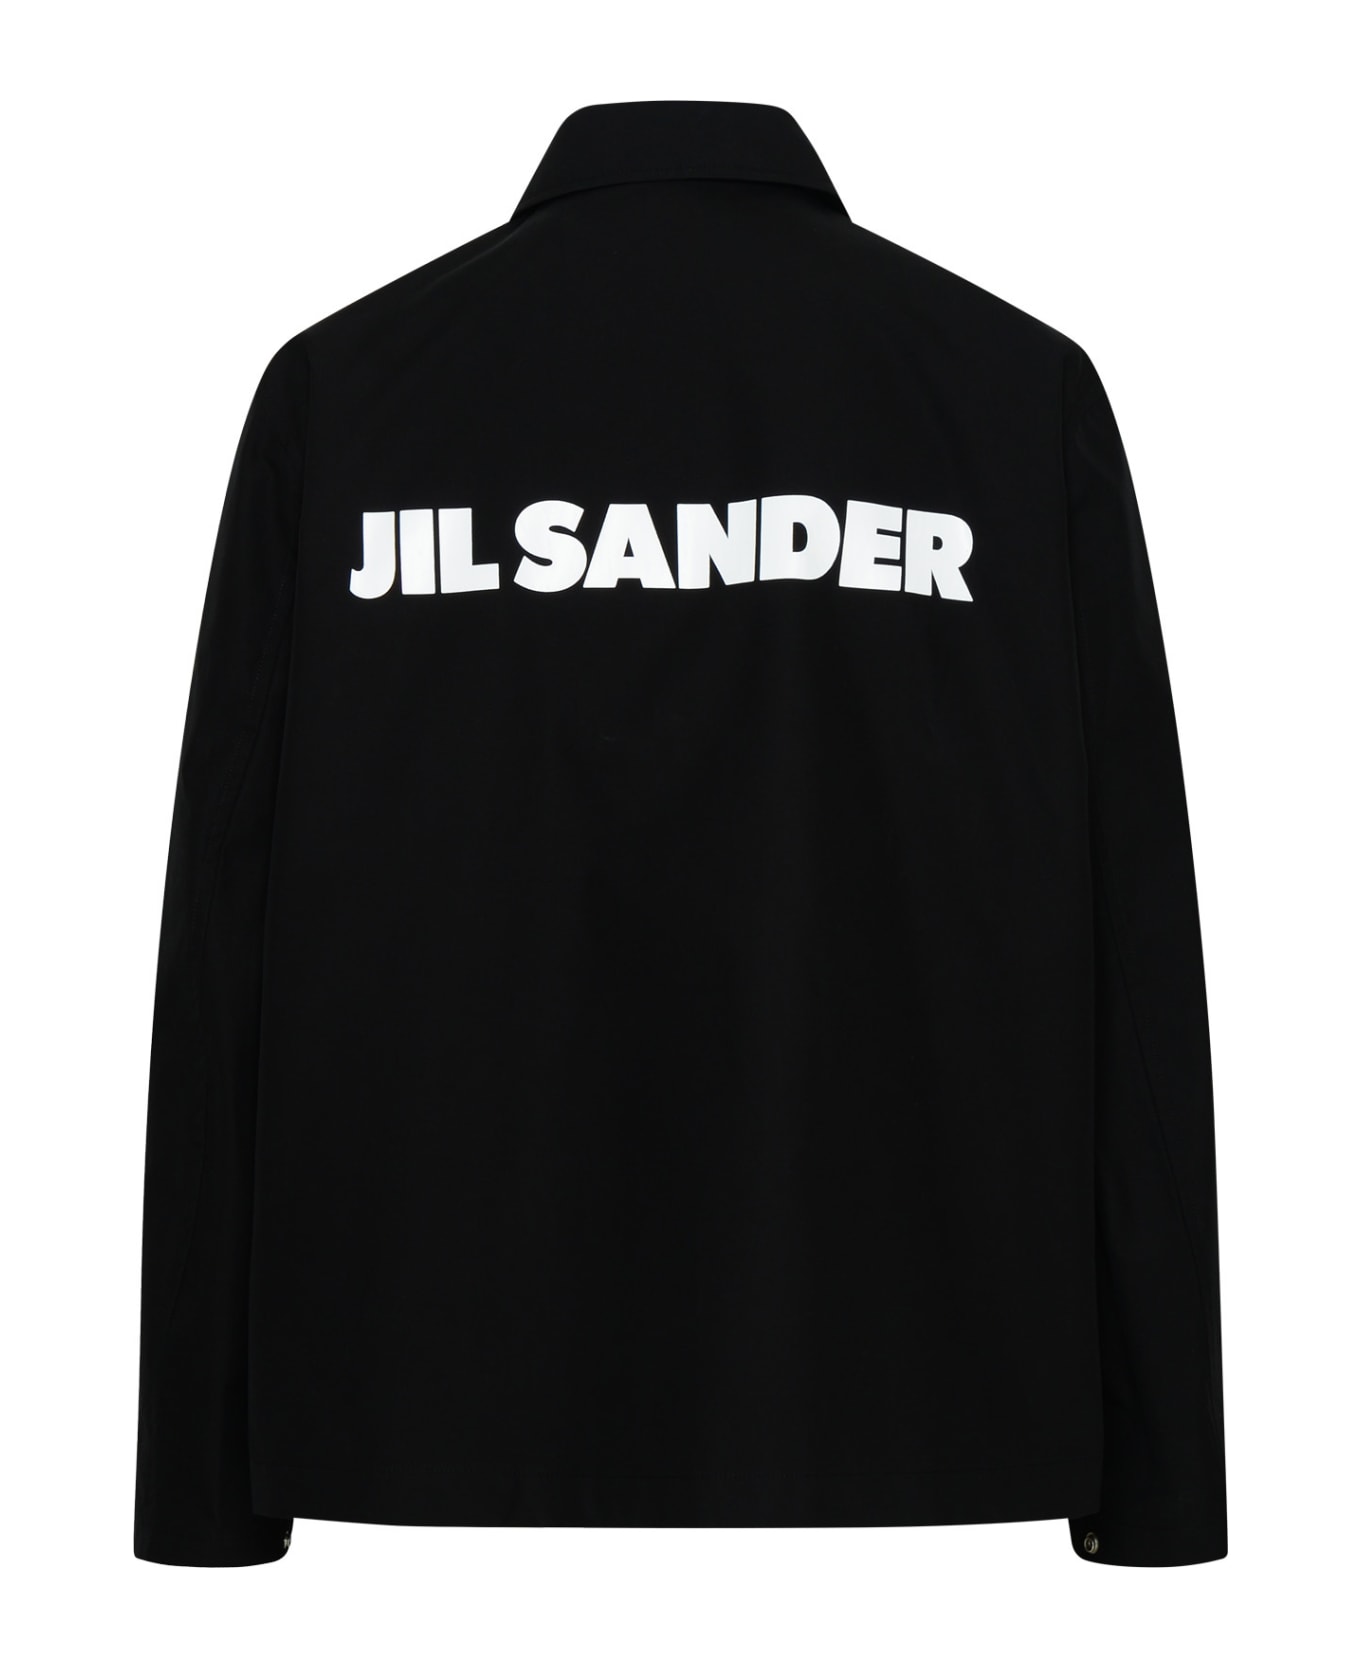 Jil Sander Black Cotton Jacket - Black